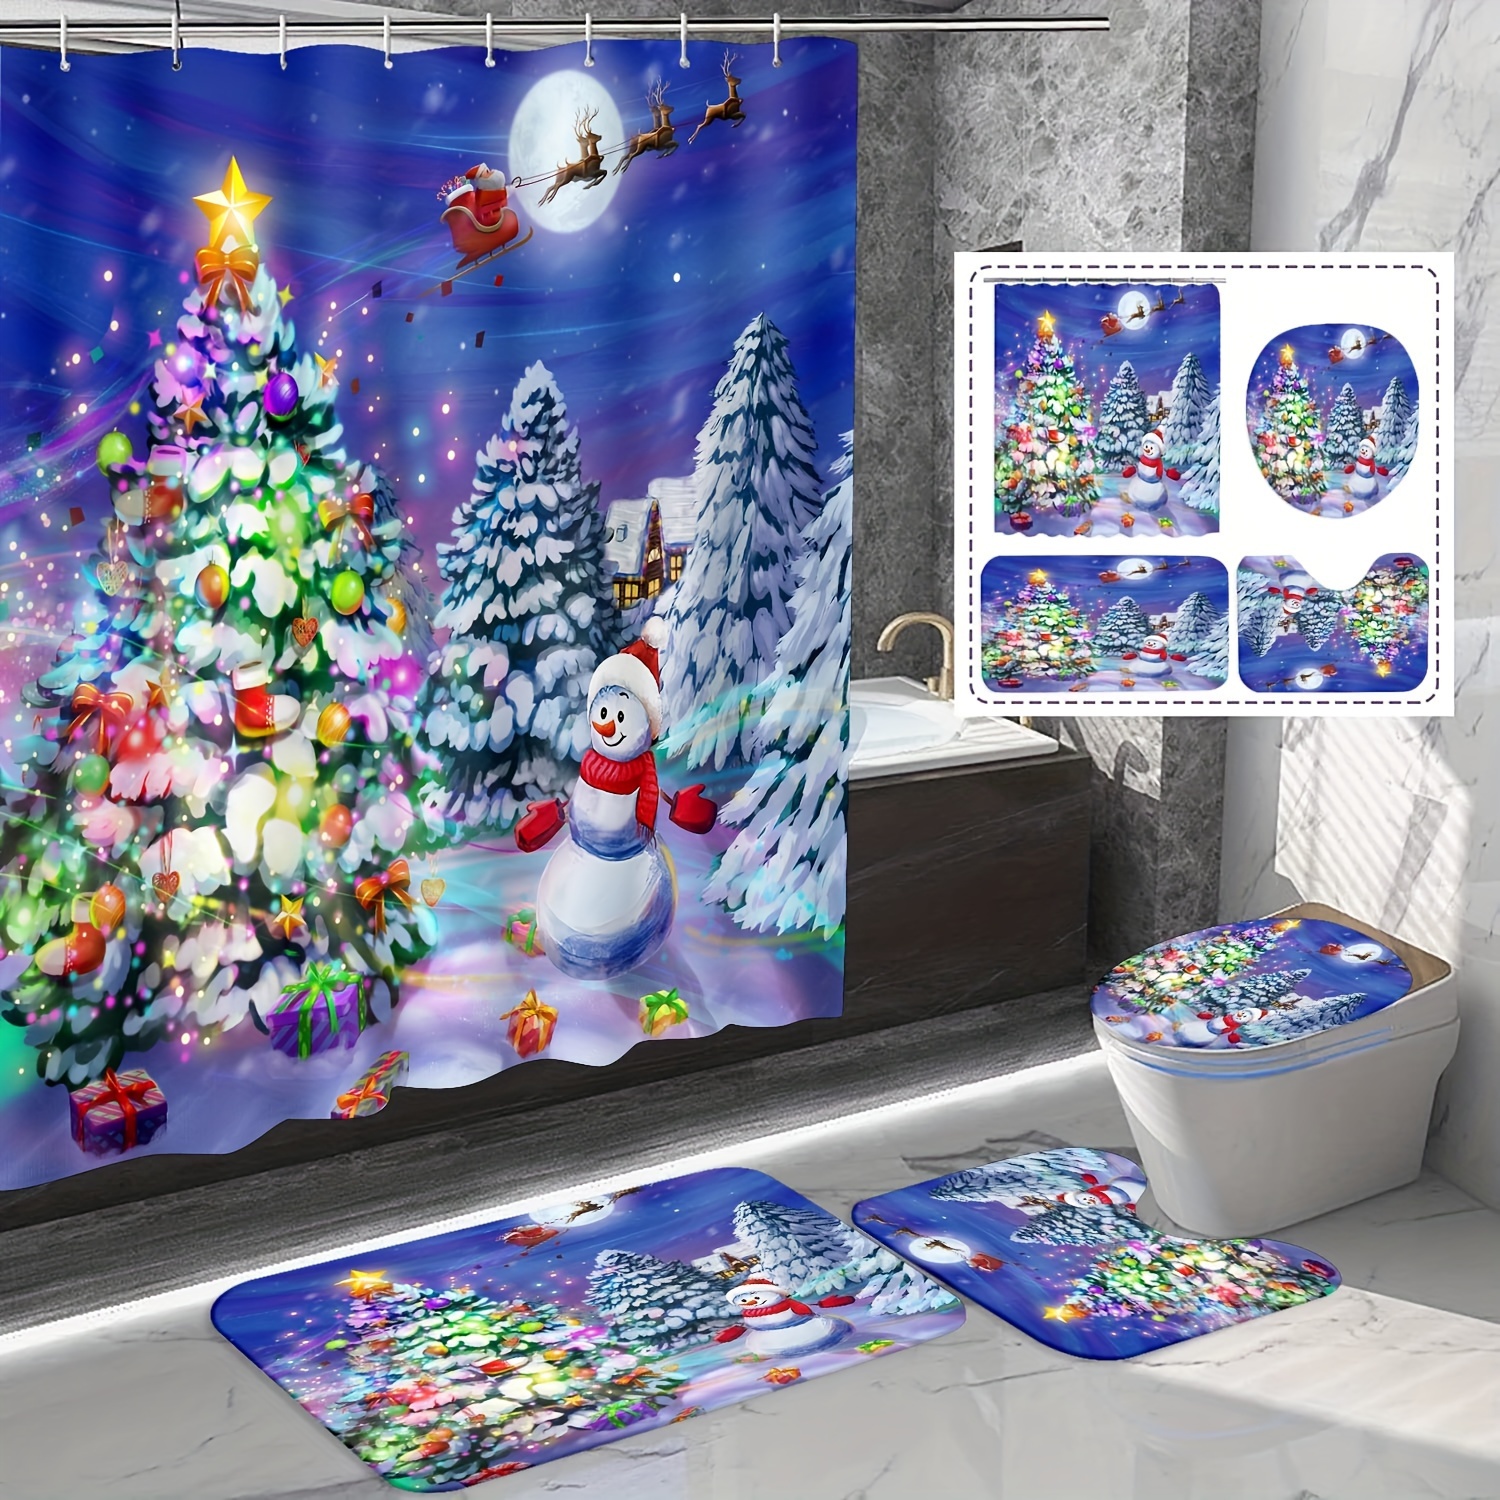  Waterproof Fabric Shower Curtain, Christmas Tree